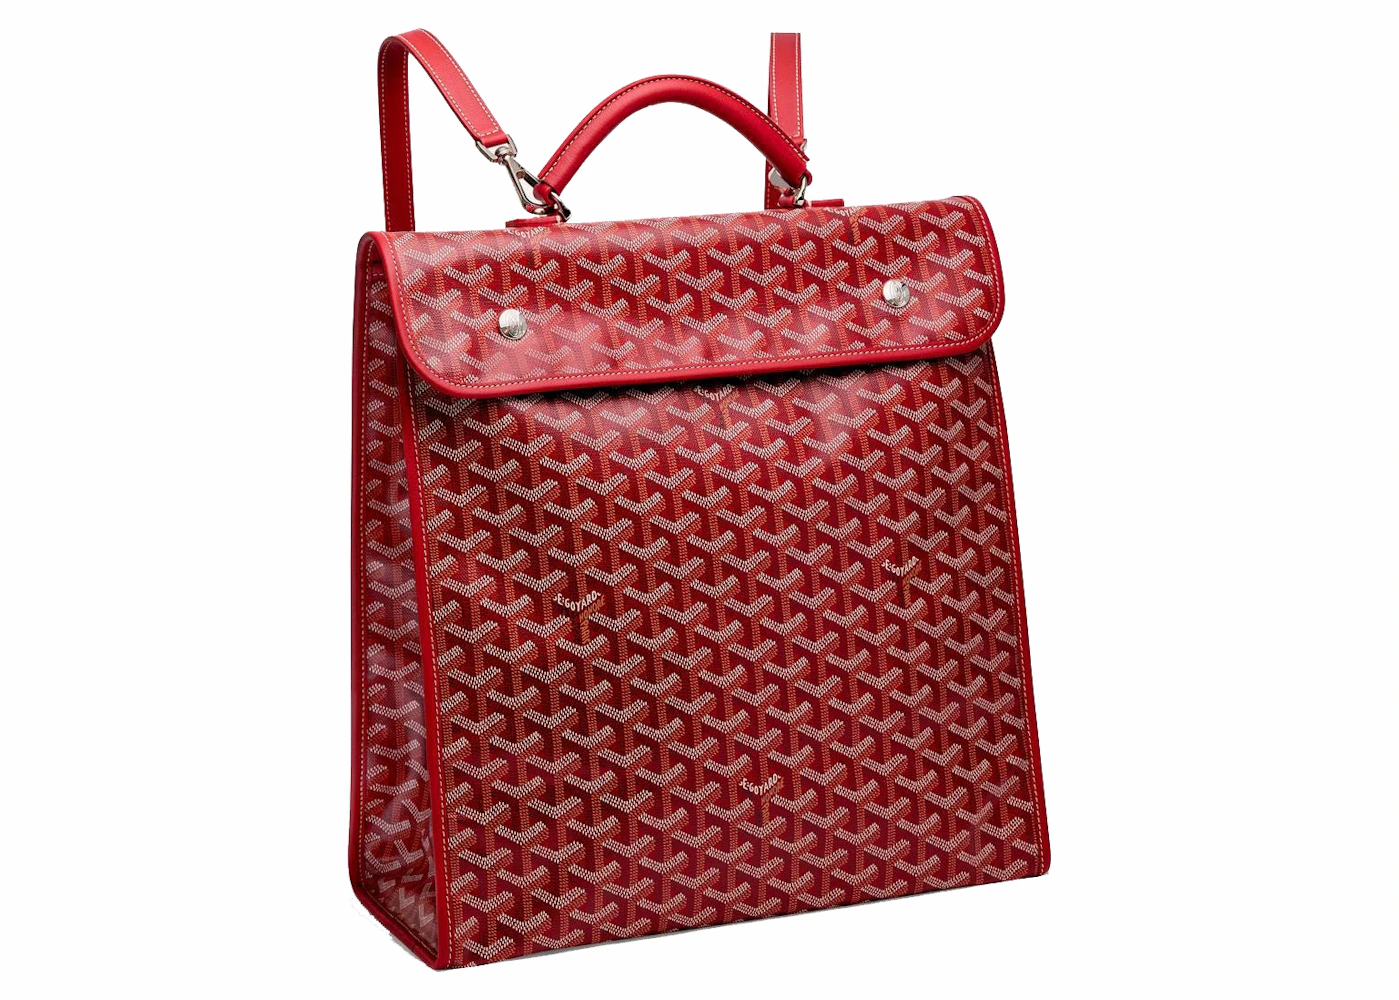 GOYARD Women's RED Canvas Tote Bag